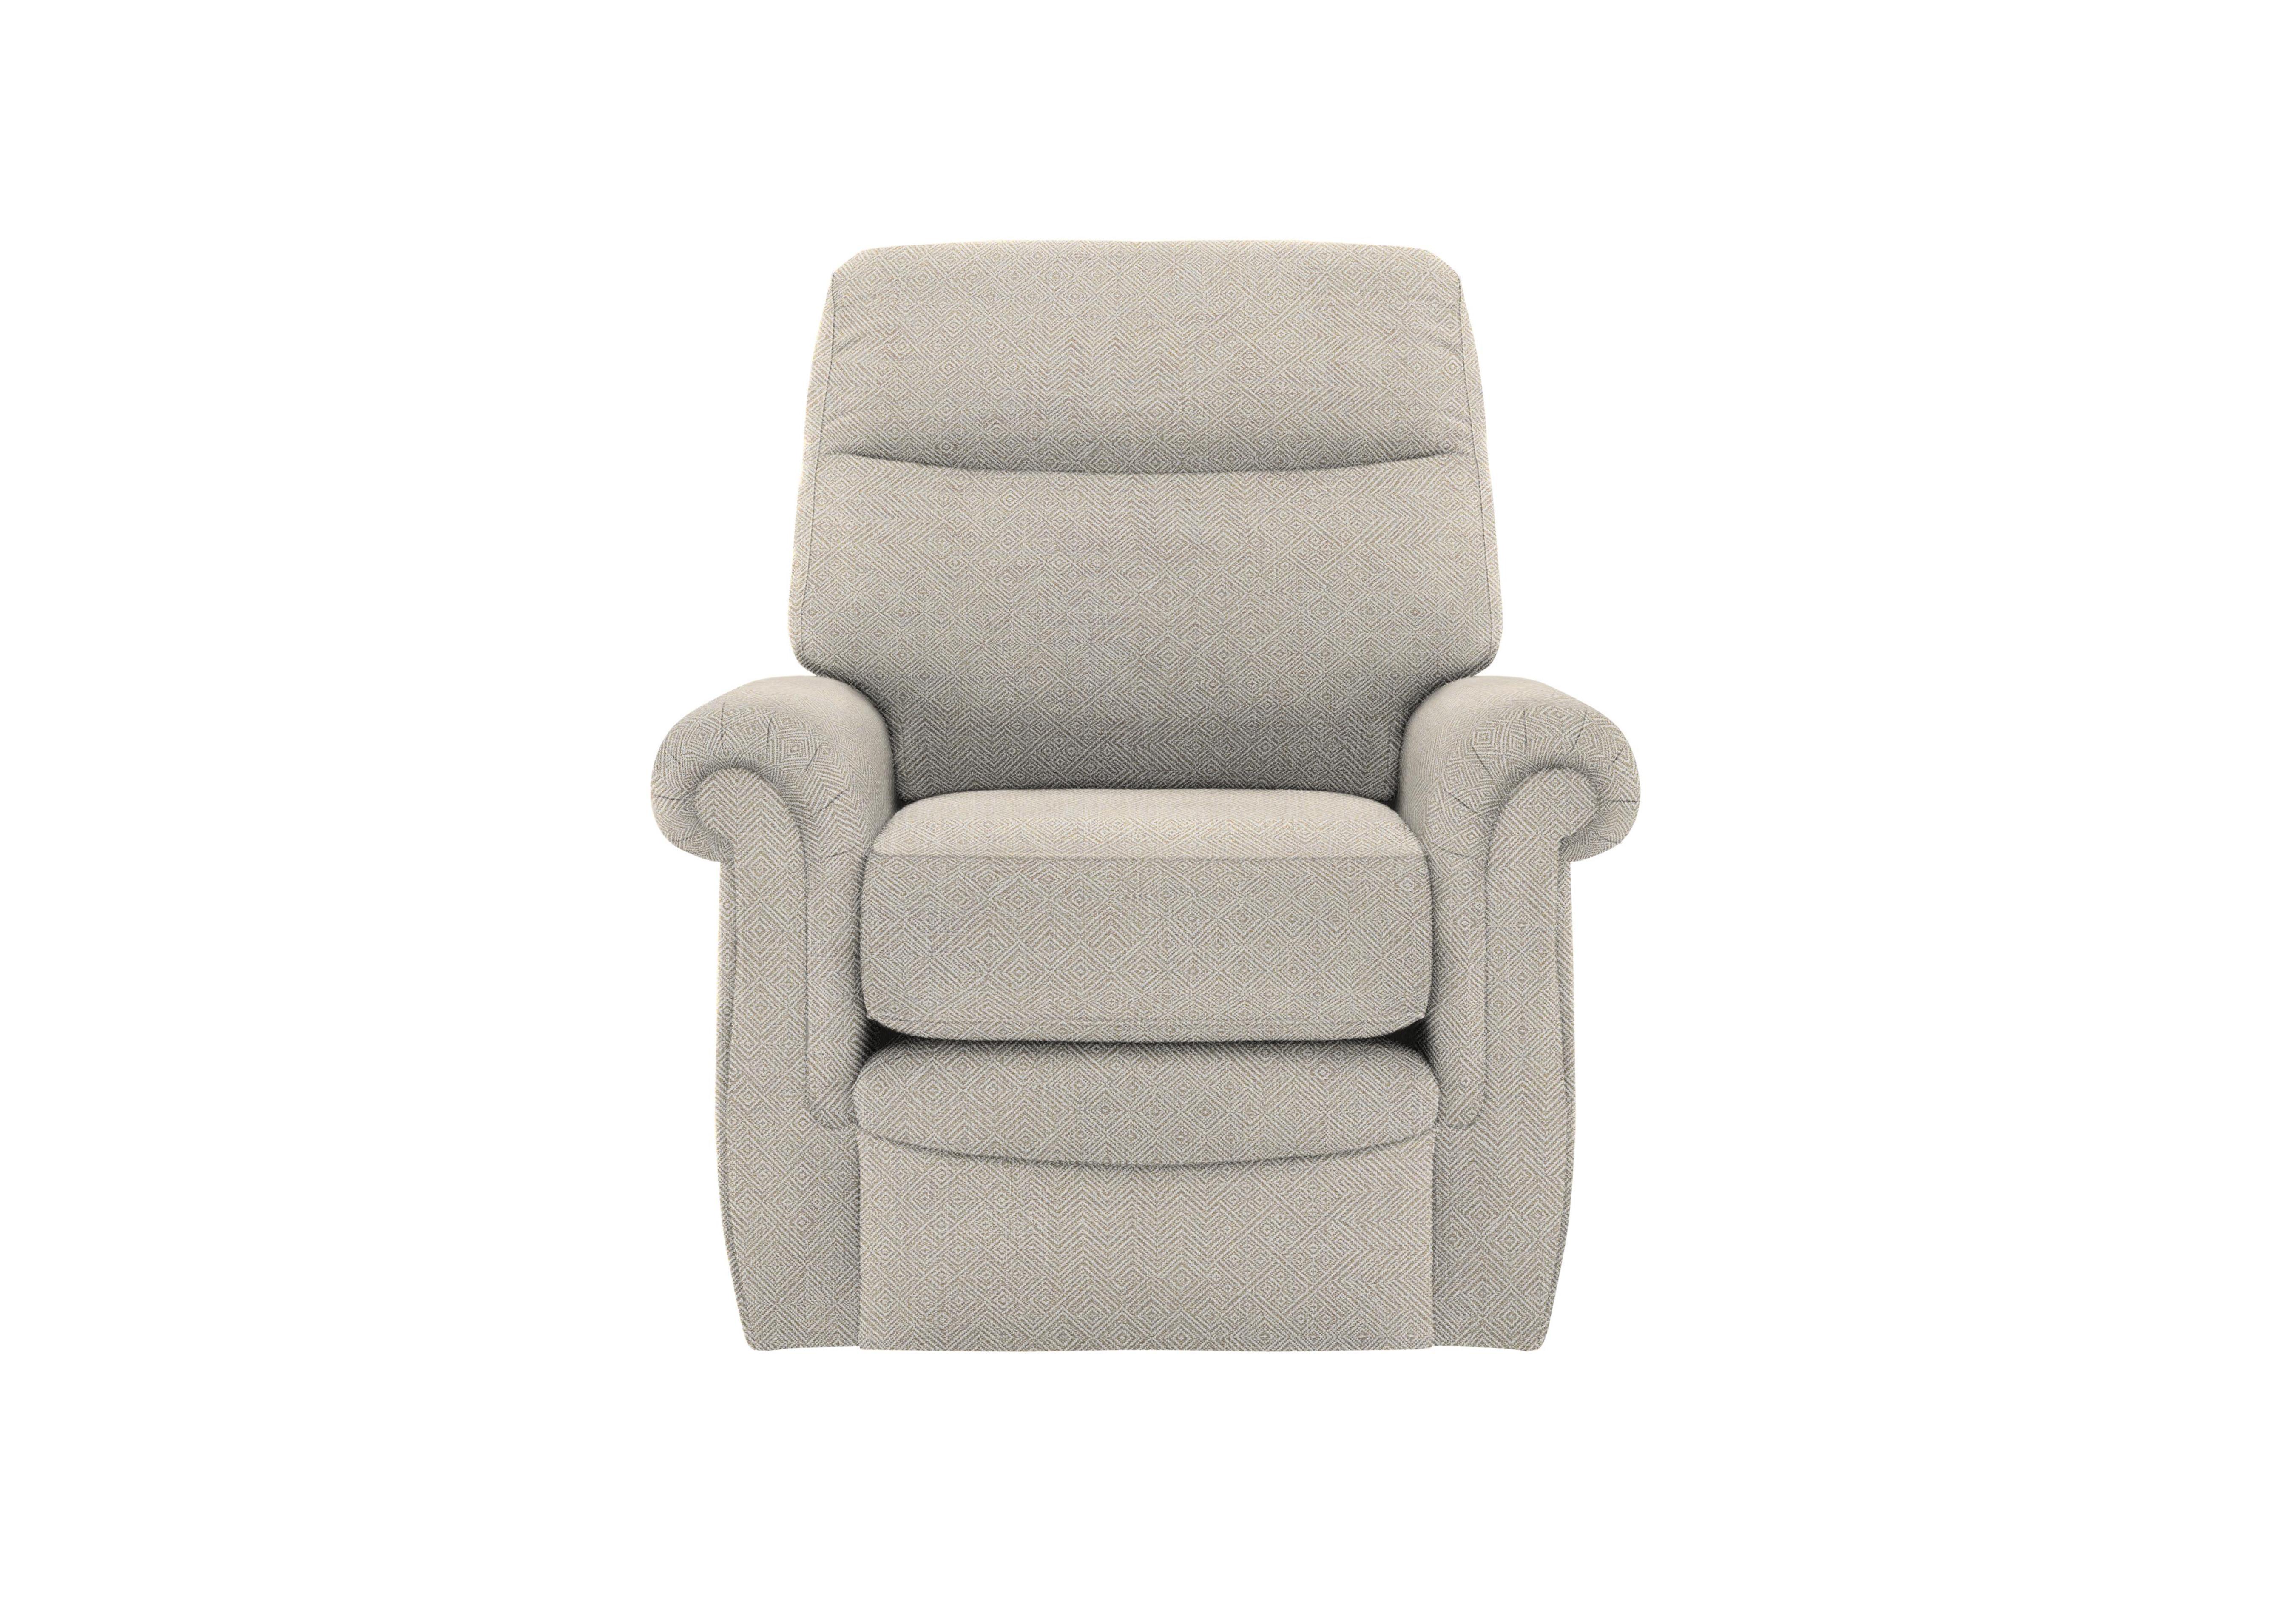 Avon Fabric Lift and Rise Armchair in B011 Nebular Blush on Furniture Village